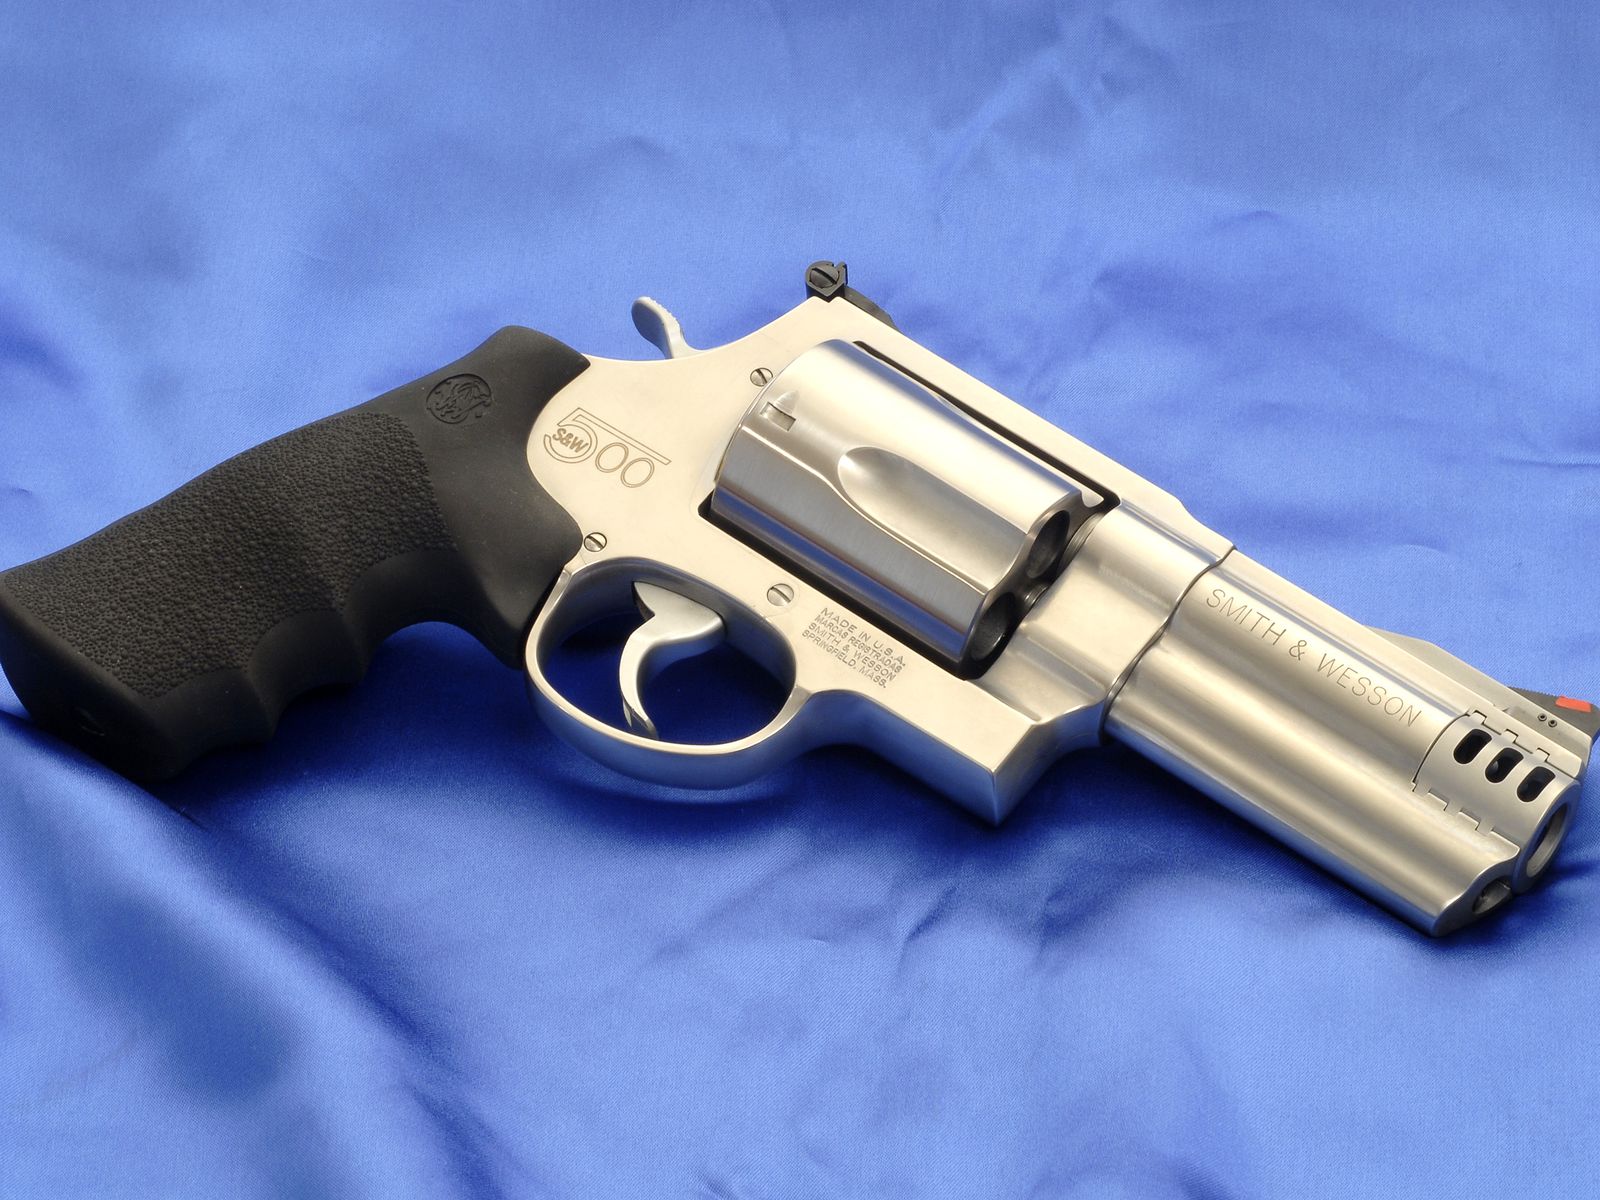 Smith Wesson Revolver Puter Wallpaper Desktop Background